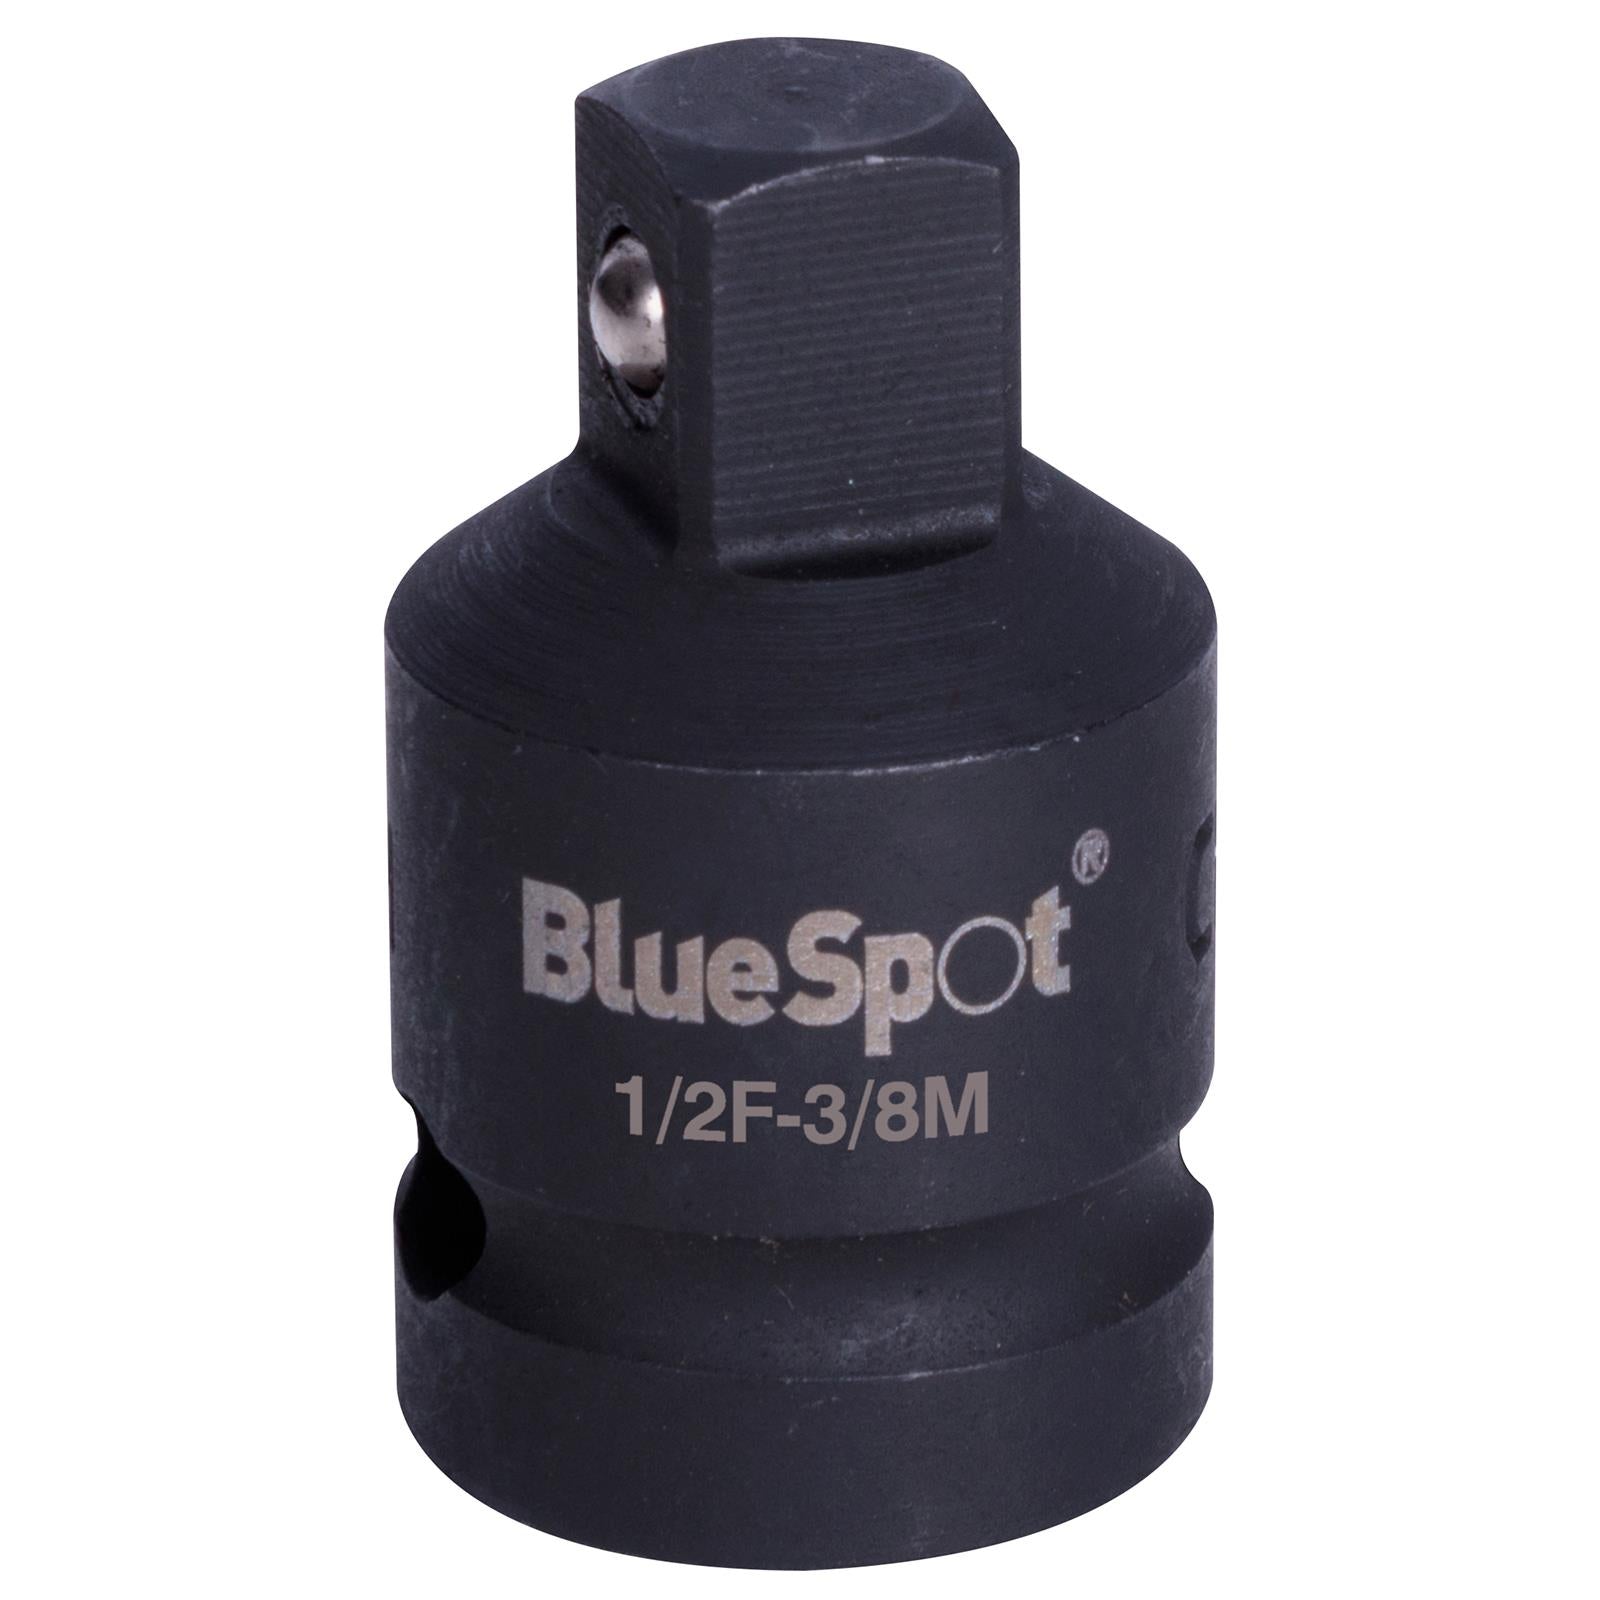 BlueSpot Impact Socket Adaptor 1/2" Female to 3/8" Male Reducer